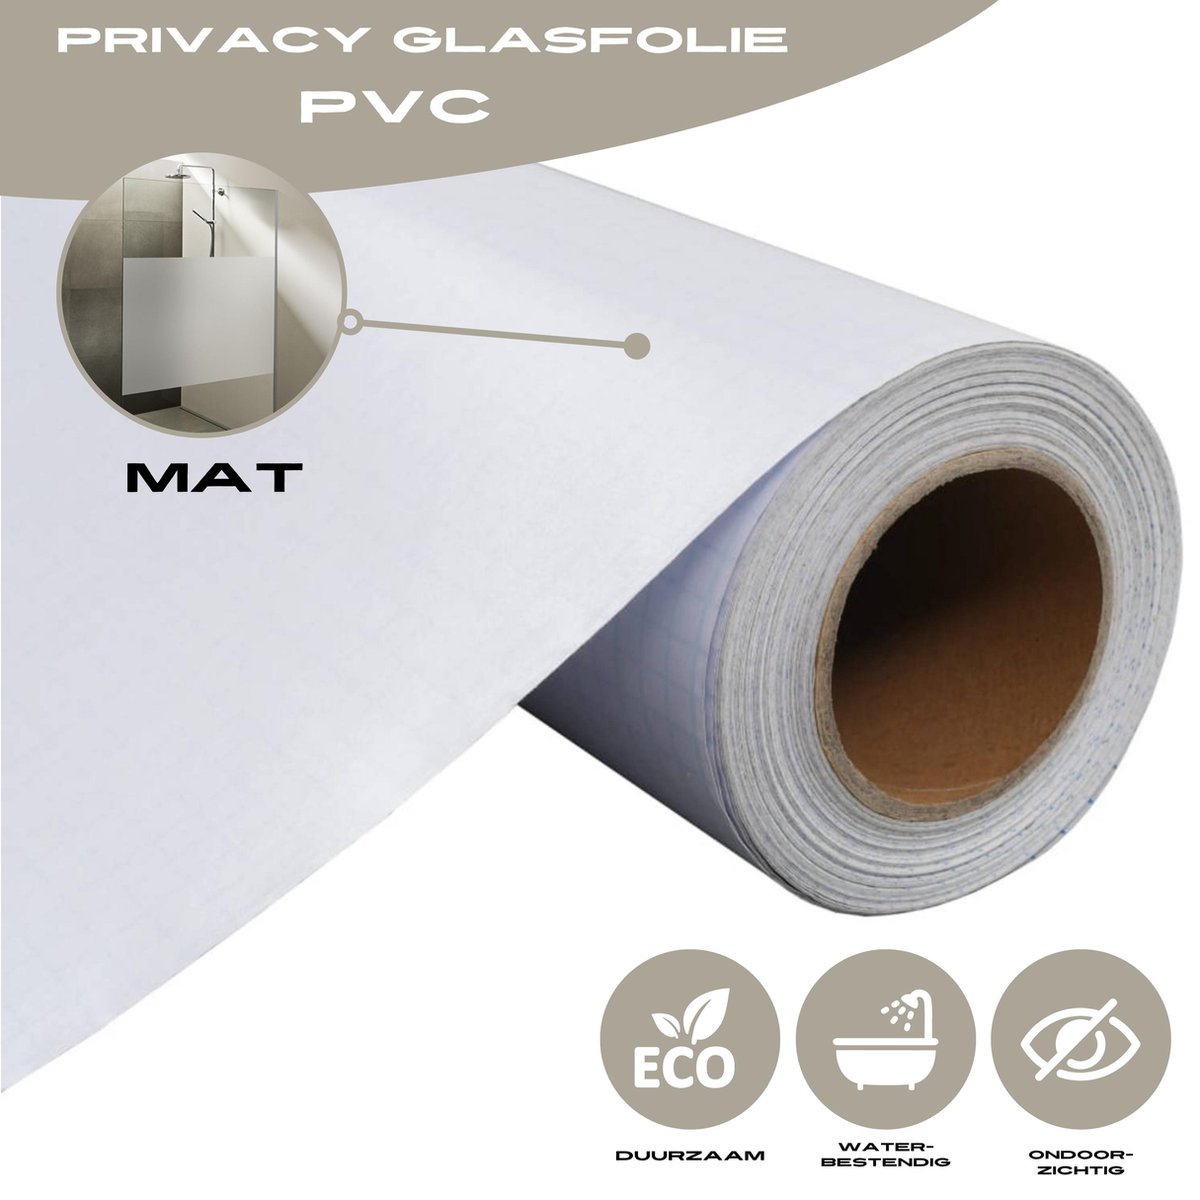 Privacyfolie - UV werend - werkt isolerend - zelfklevend - mat - melkglas - duurzaam - isolatie - folie - raamfolie - inkijkwerend - ondoorzichtig wit - matglas - badkamerfolie - badkamer - huiskamer - keuken - slaapkamer - glasfolie - 0,9 m x 50 m